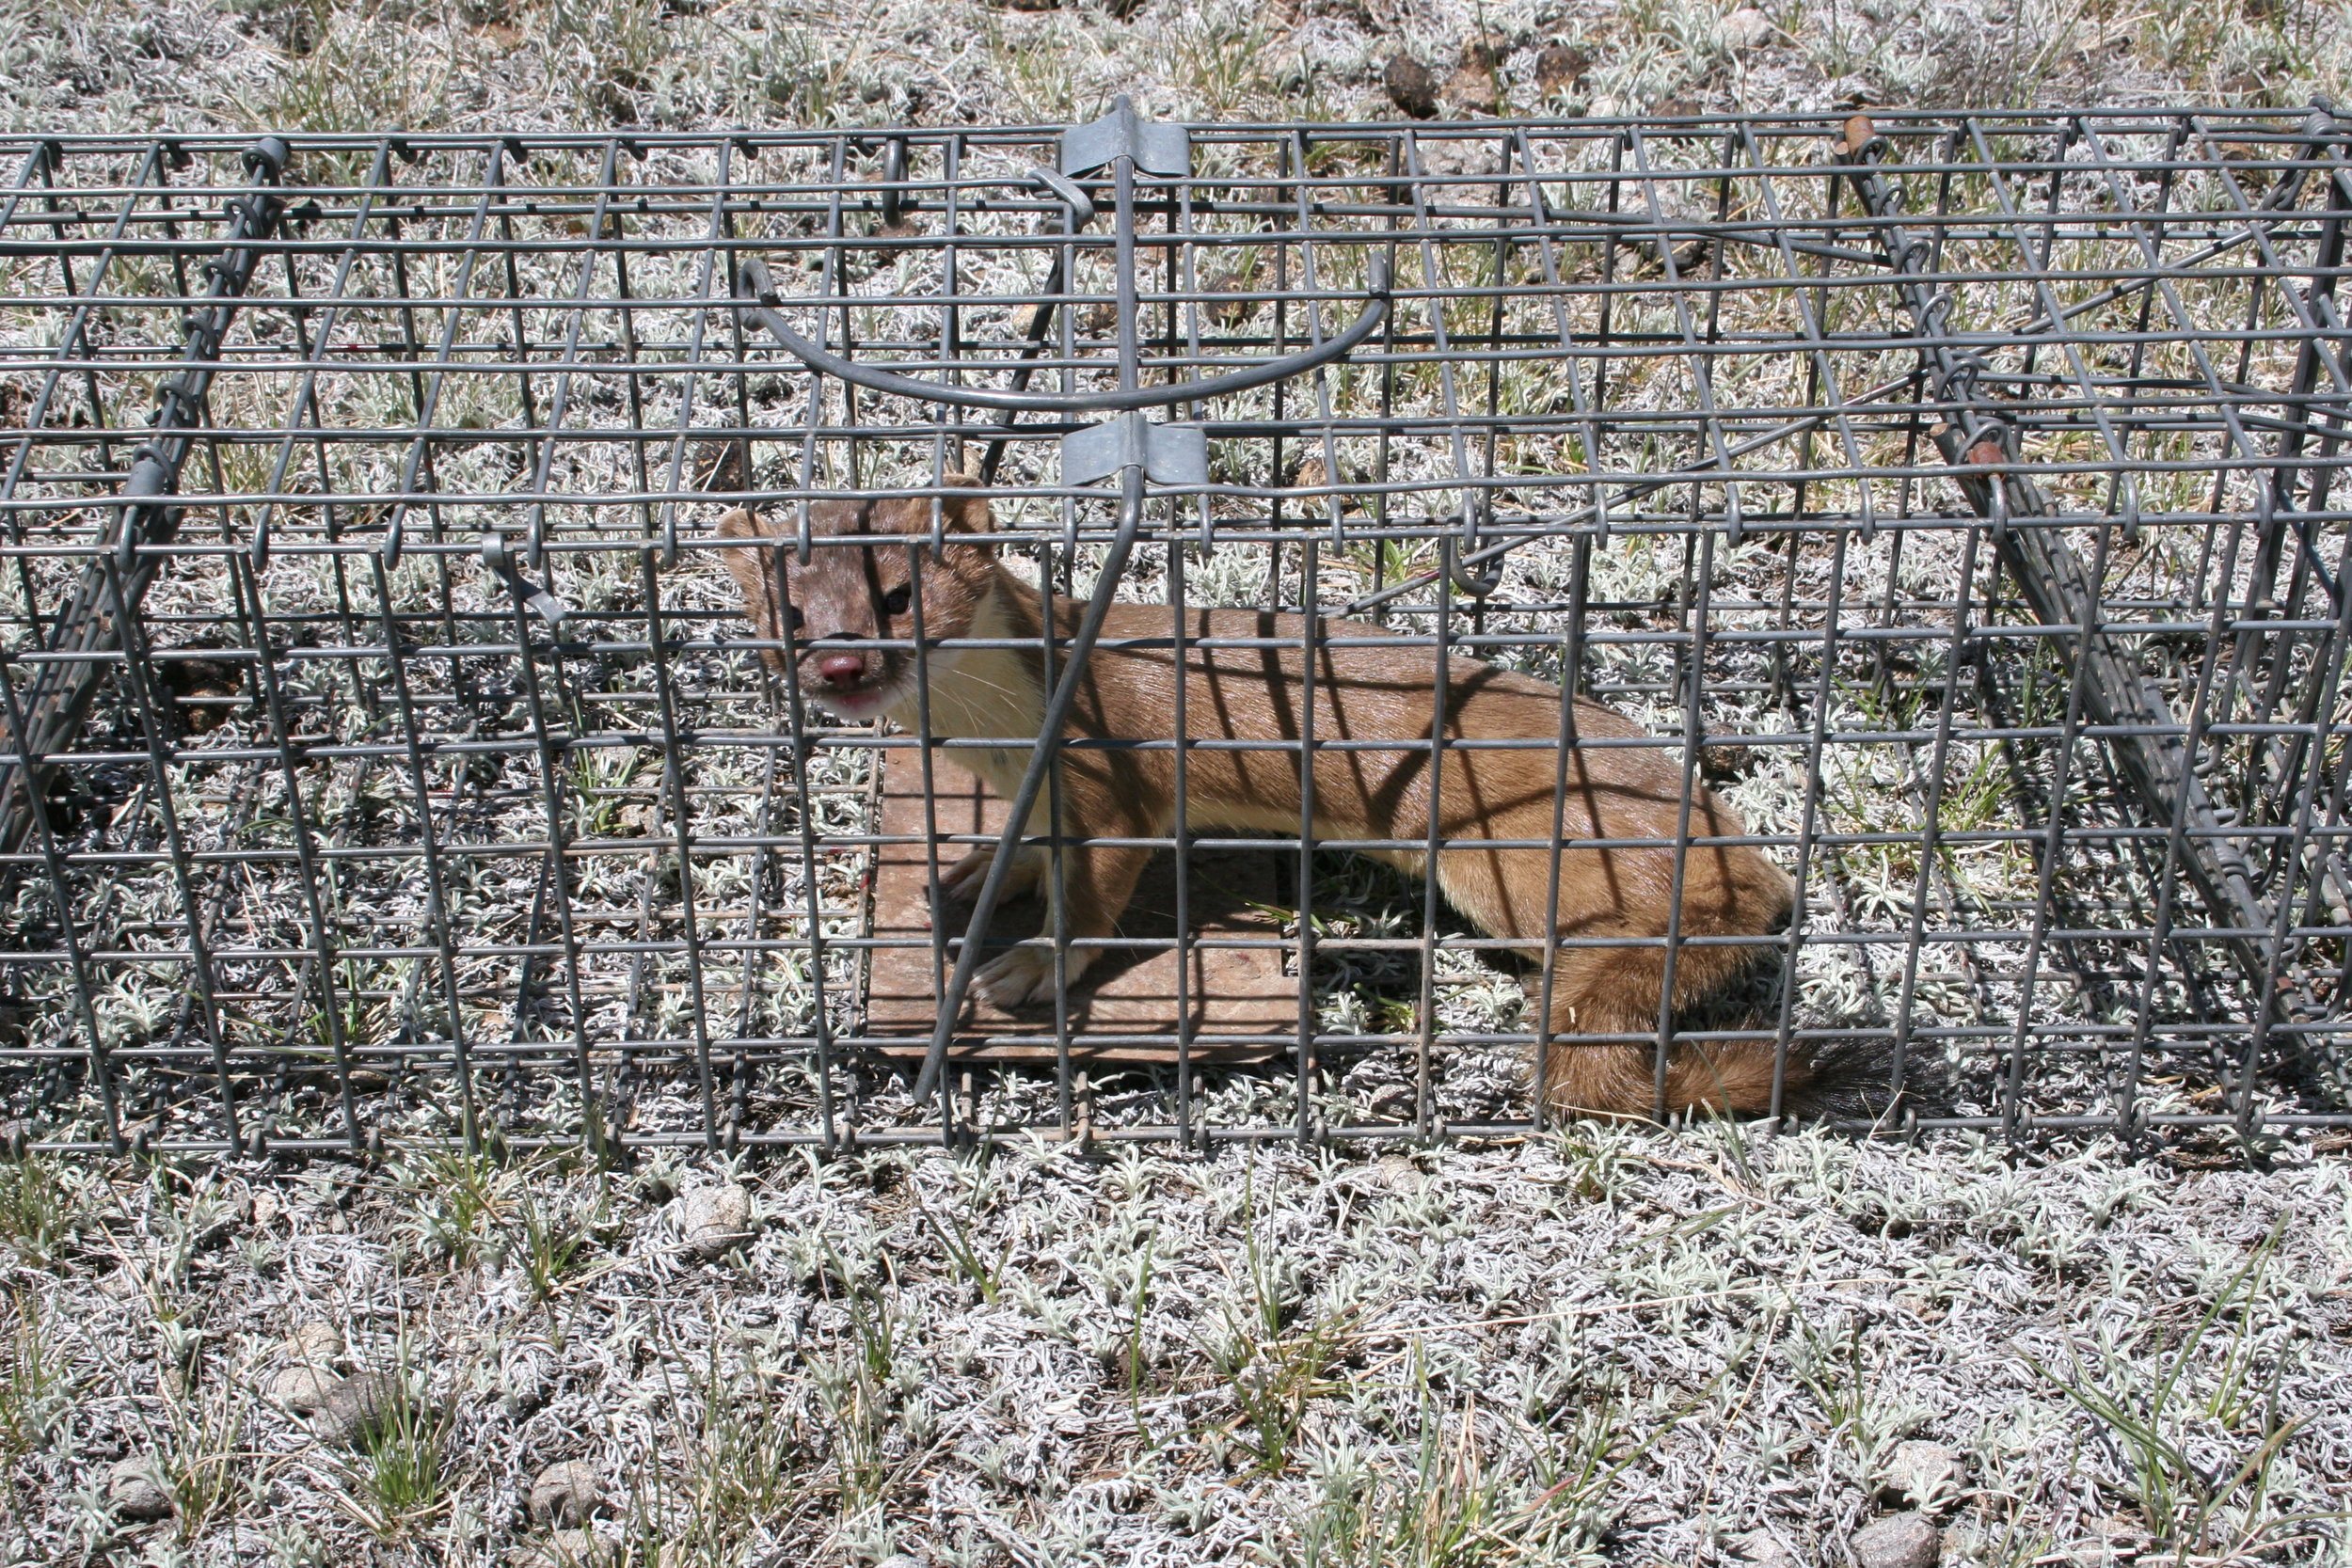  A wandering weasel makes its way into a prairie dog trap.  ©John Hoogland 2006  